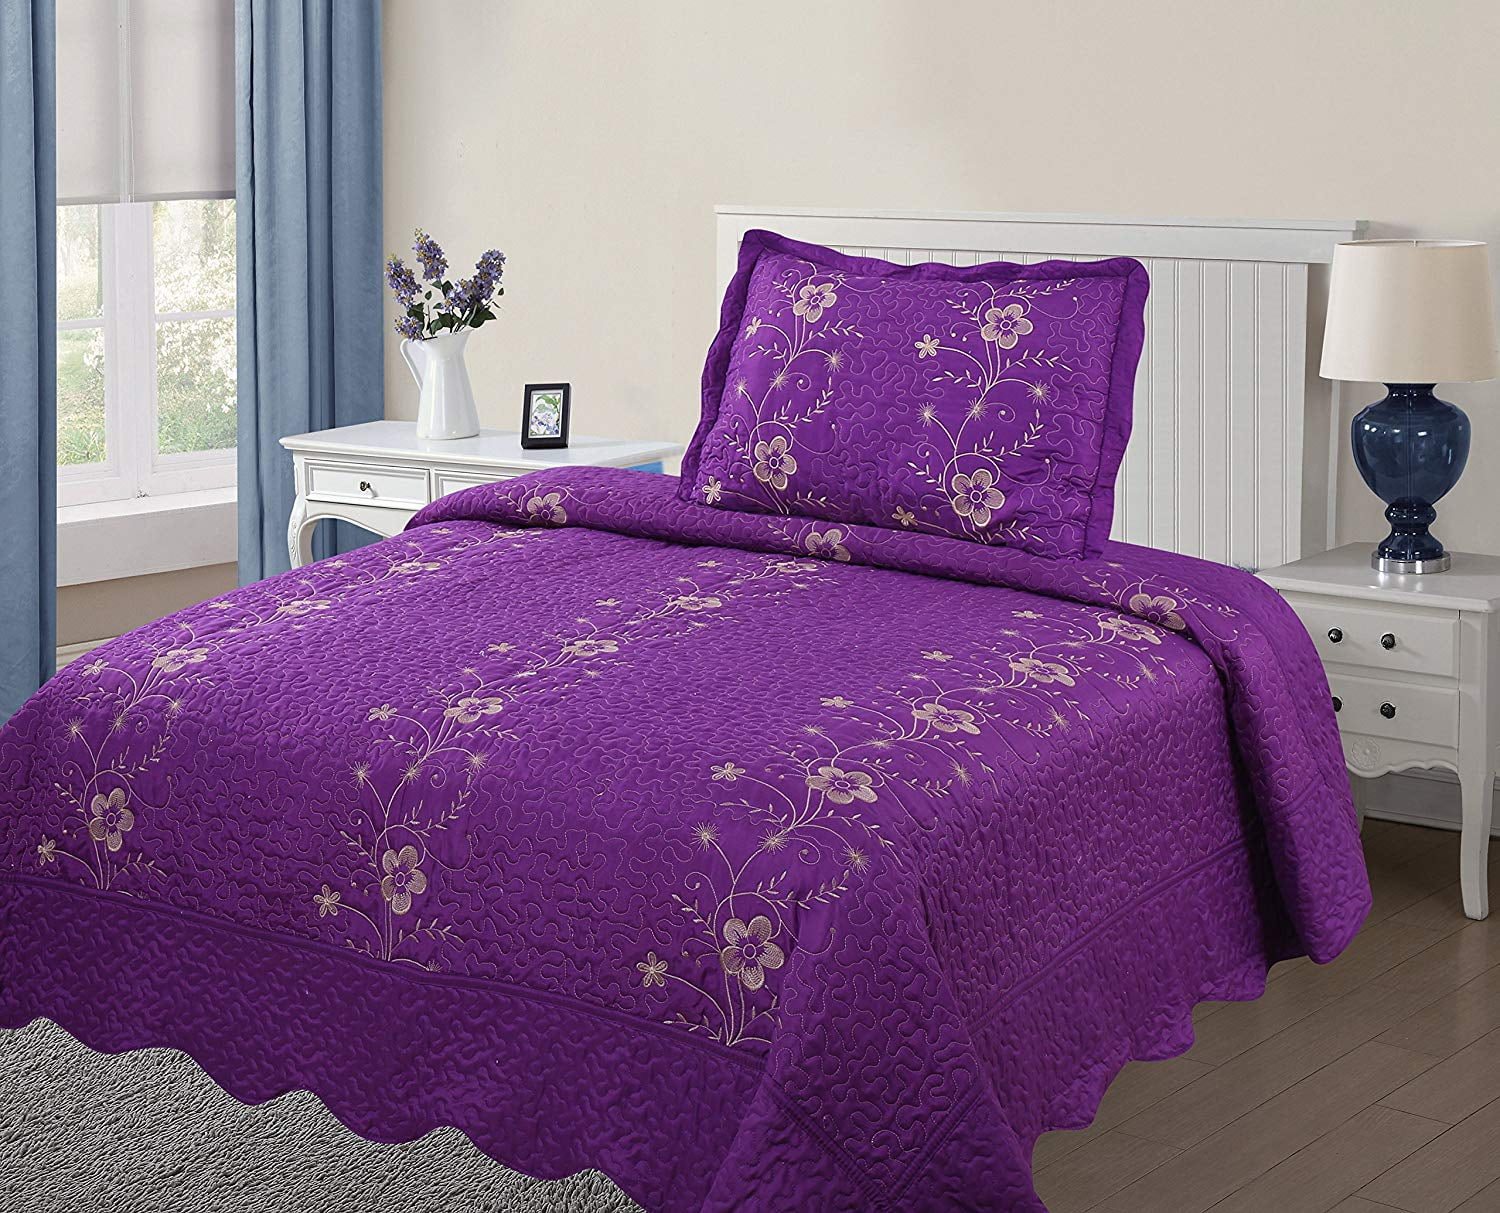 Details about   Purple Floral 100% Cotton Quilt Bedspread Bedding Set Bed Spread Pillow Shams 